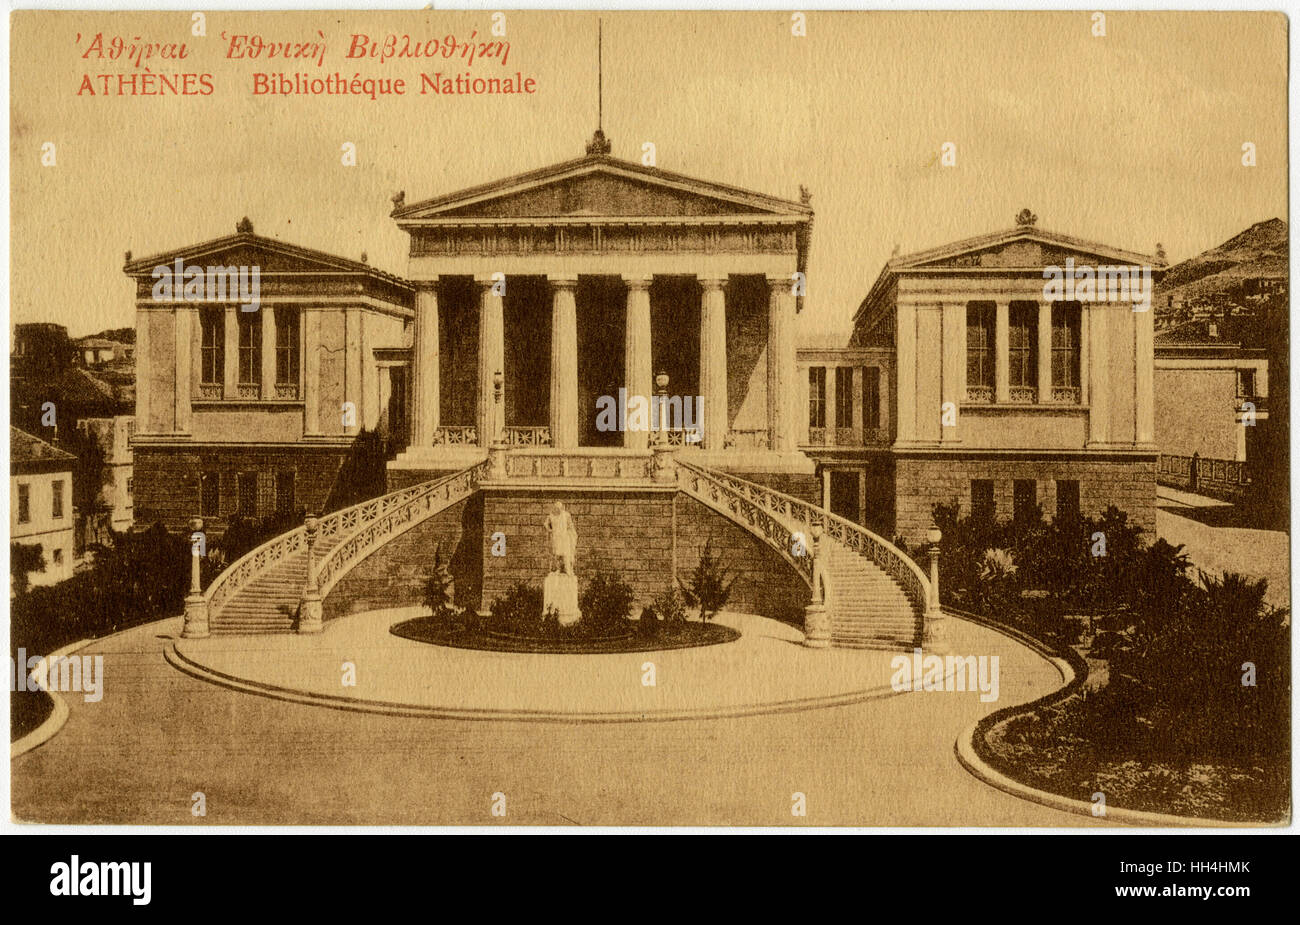 La Biblioteca Nacional, Atenas, Grecia Foto de stock